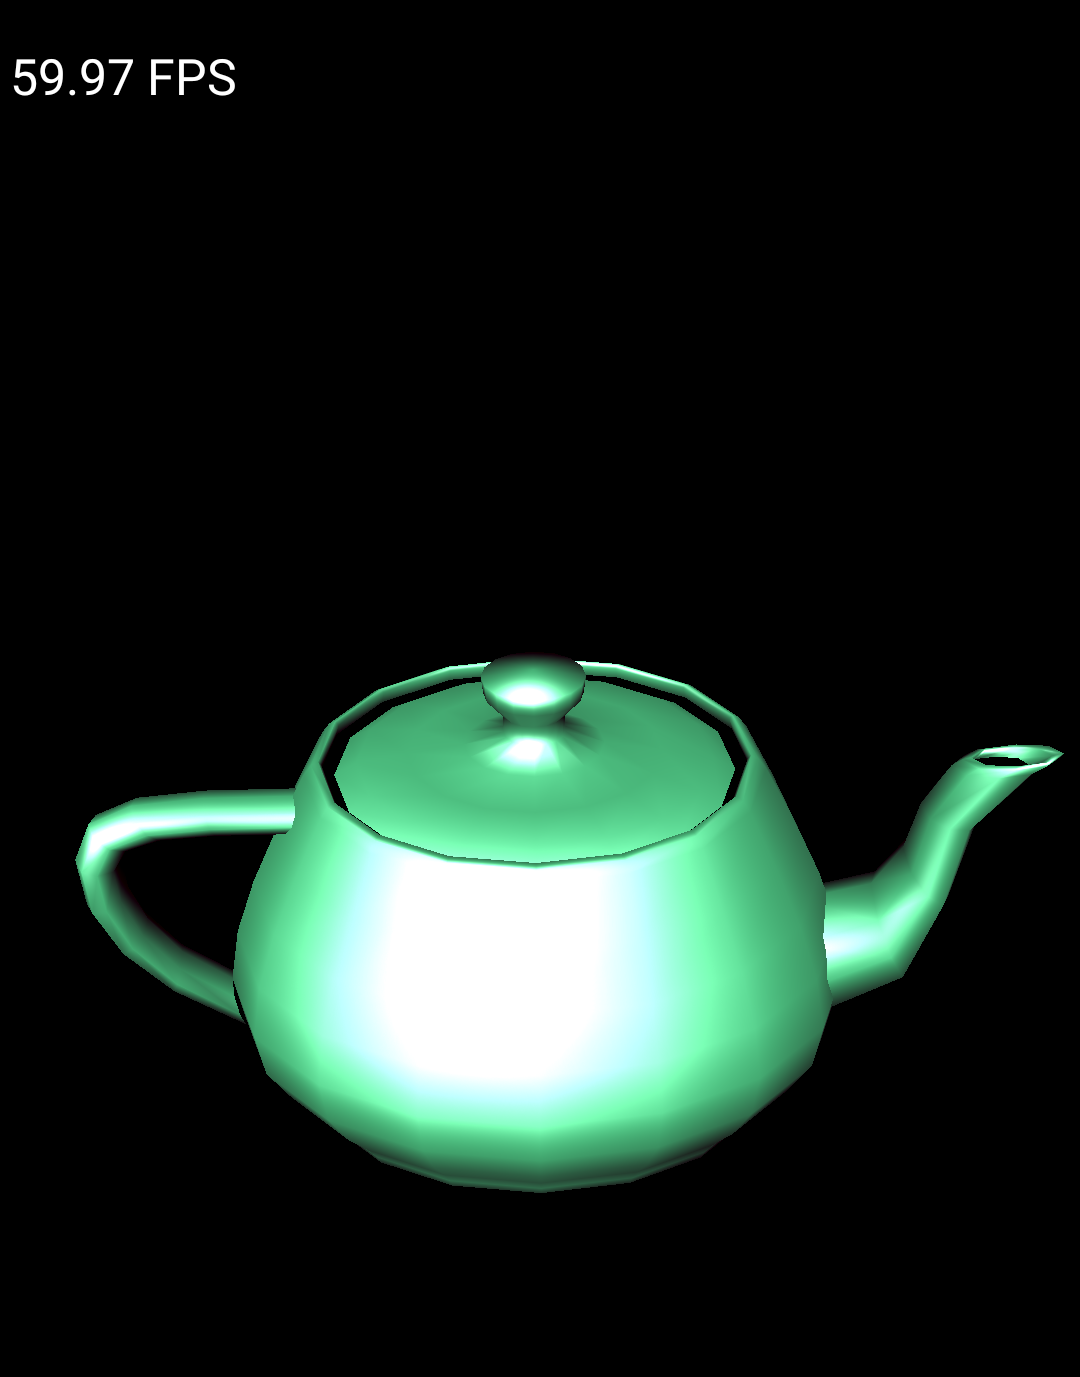 Teapot sample running on an emulator